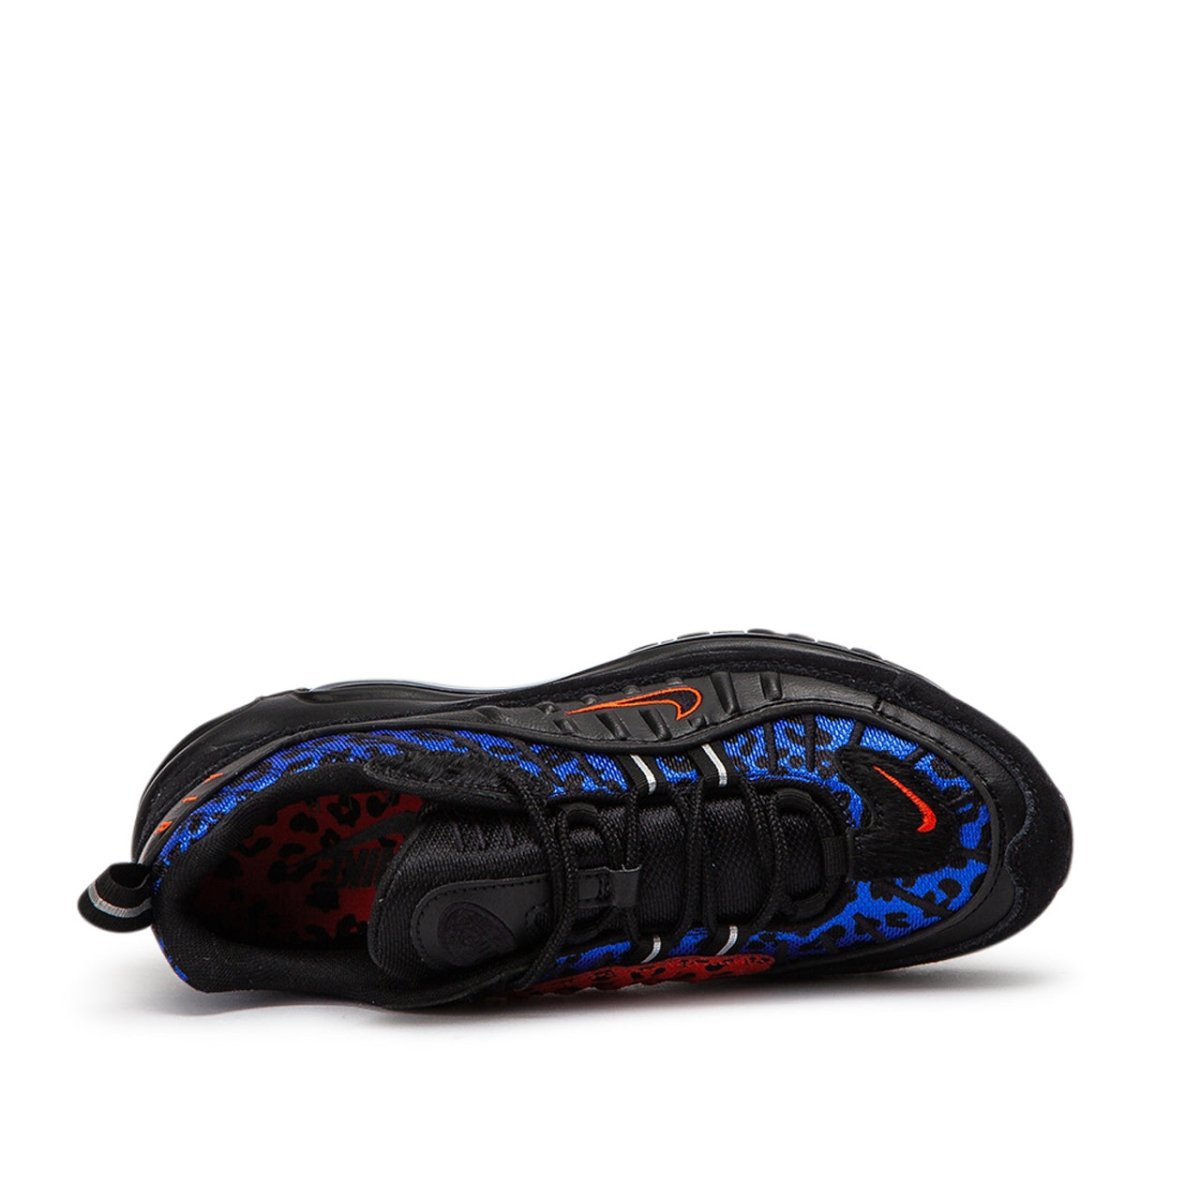 Nike WMNS Air Max 98 Premium 'Black Leopard' (Schwarz)  - Allike Store